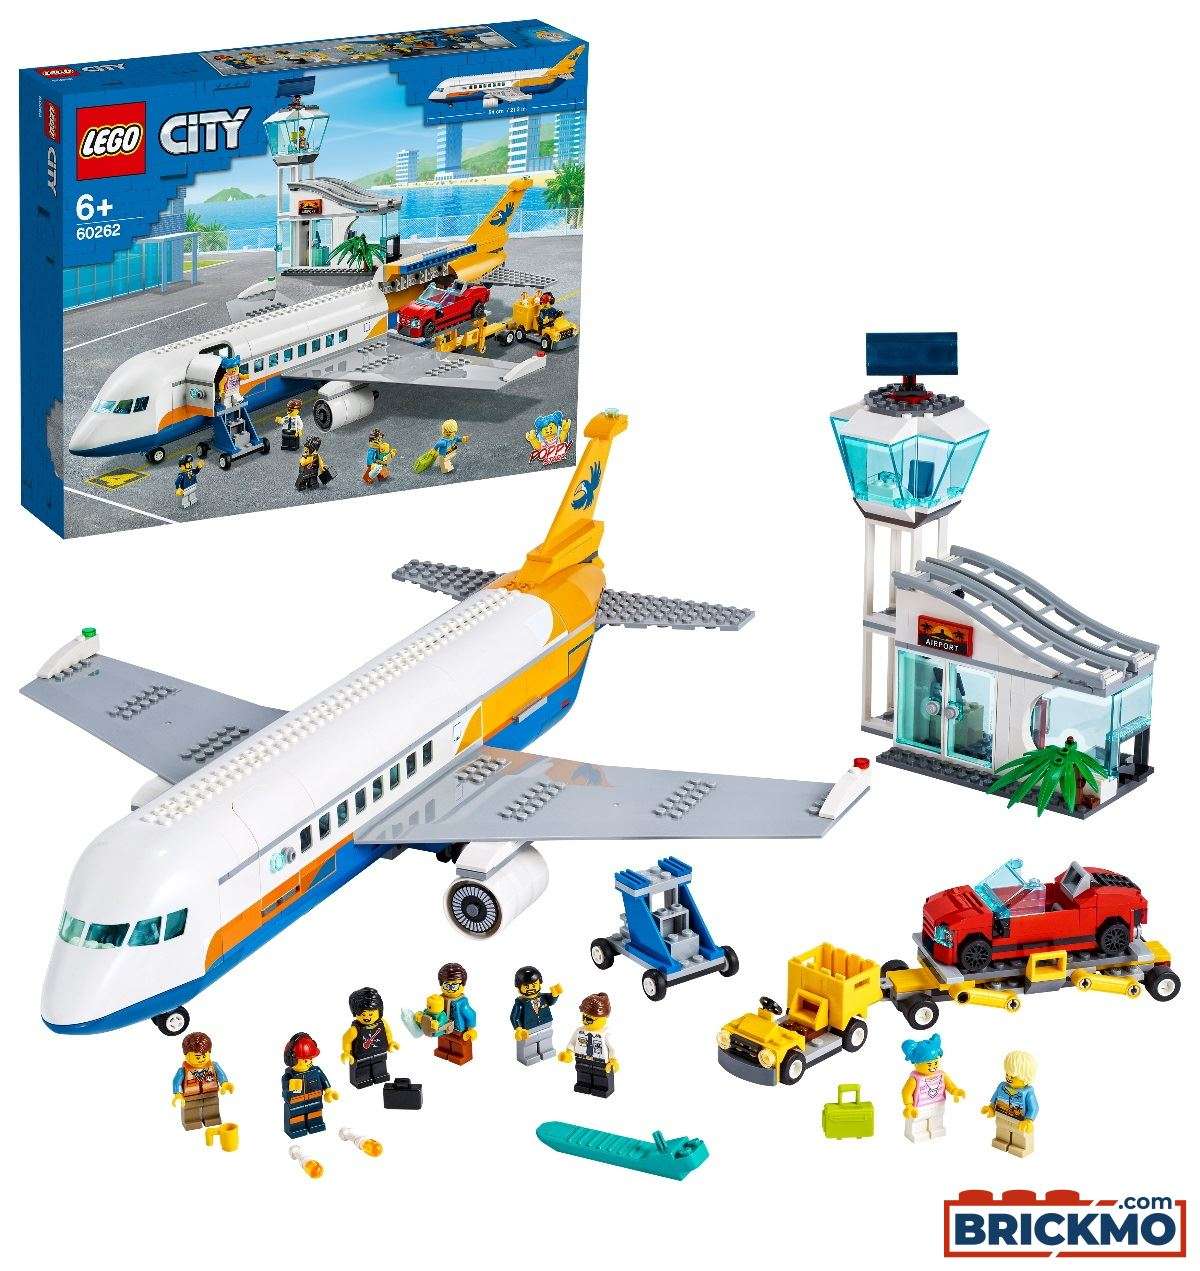 LEGO City 60262 Passagierflugzeug 60262